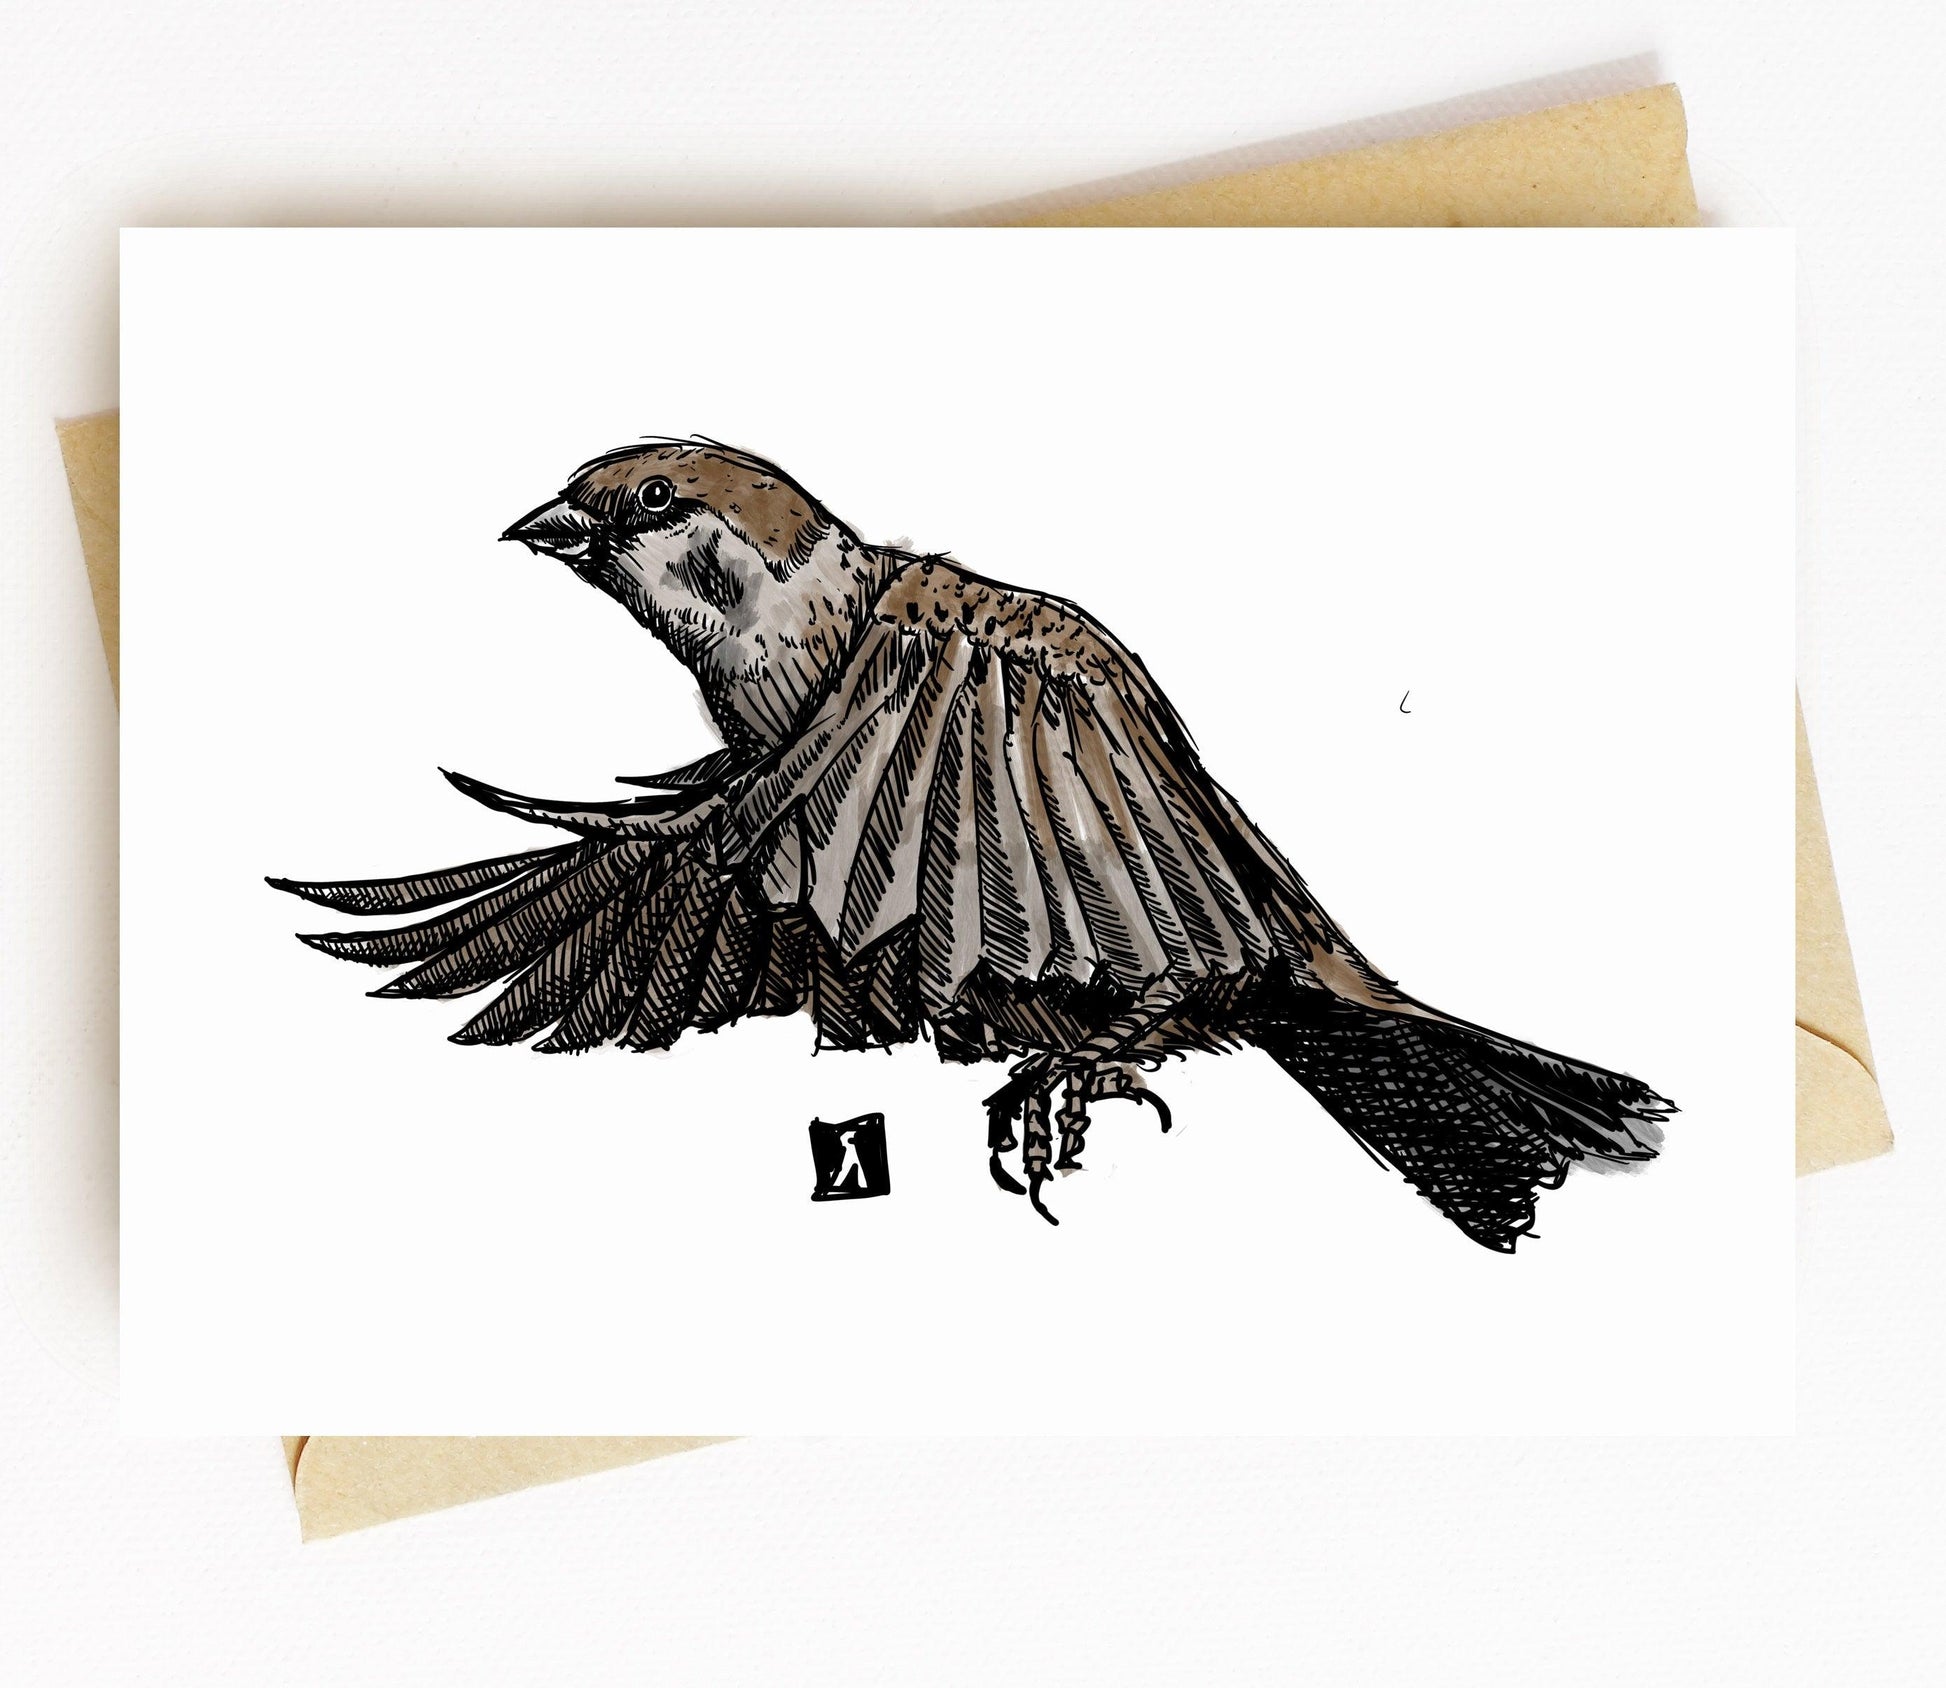 BellavanceInk: Greeting Card With Sparrow In Mid Flight Pen & Ink Watercolor Illustration 5 x 7 Inches - BellavanceInk